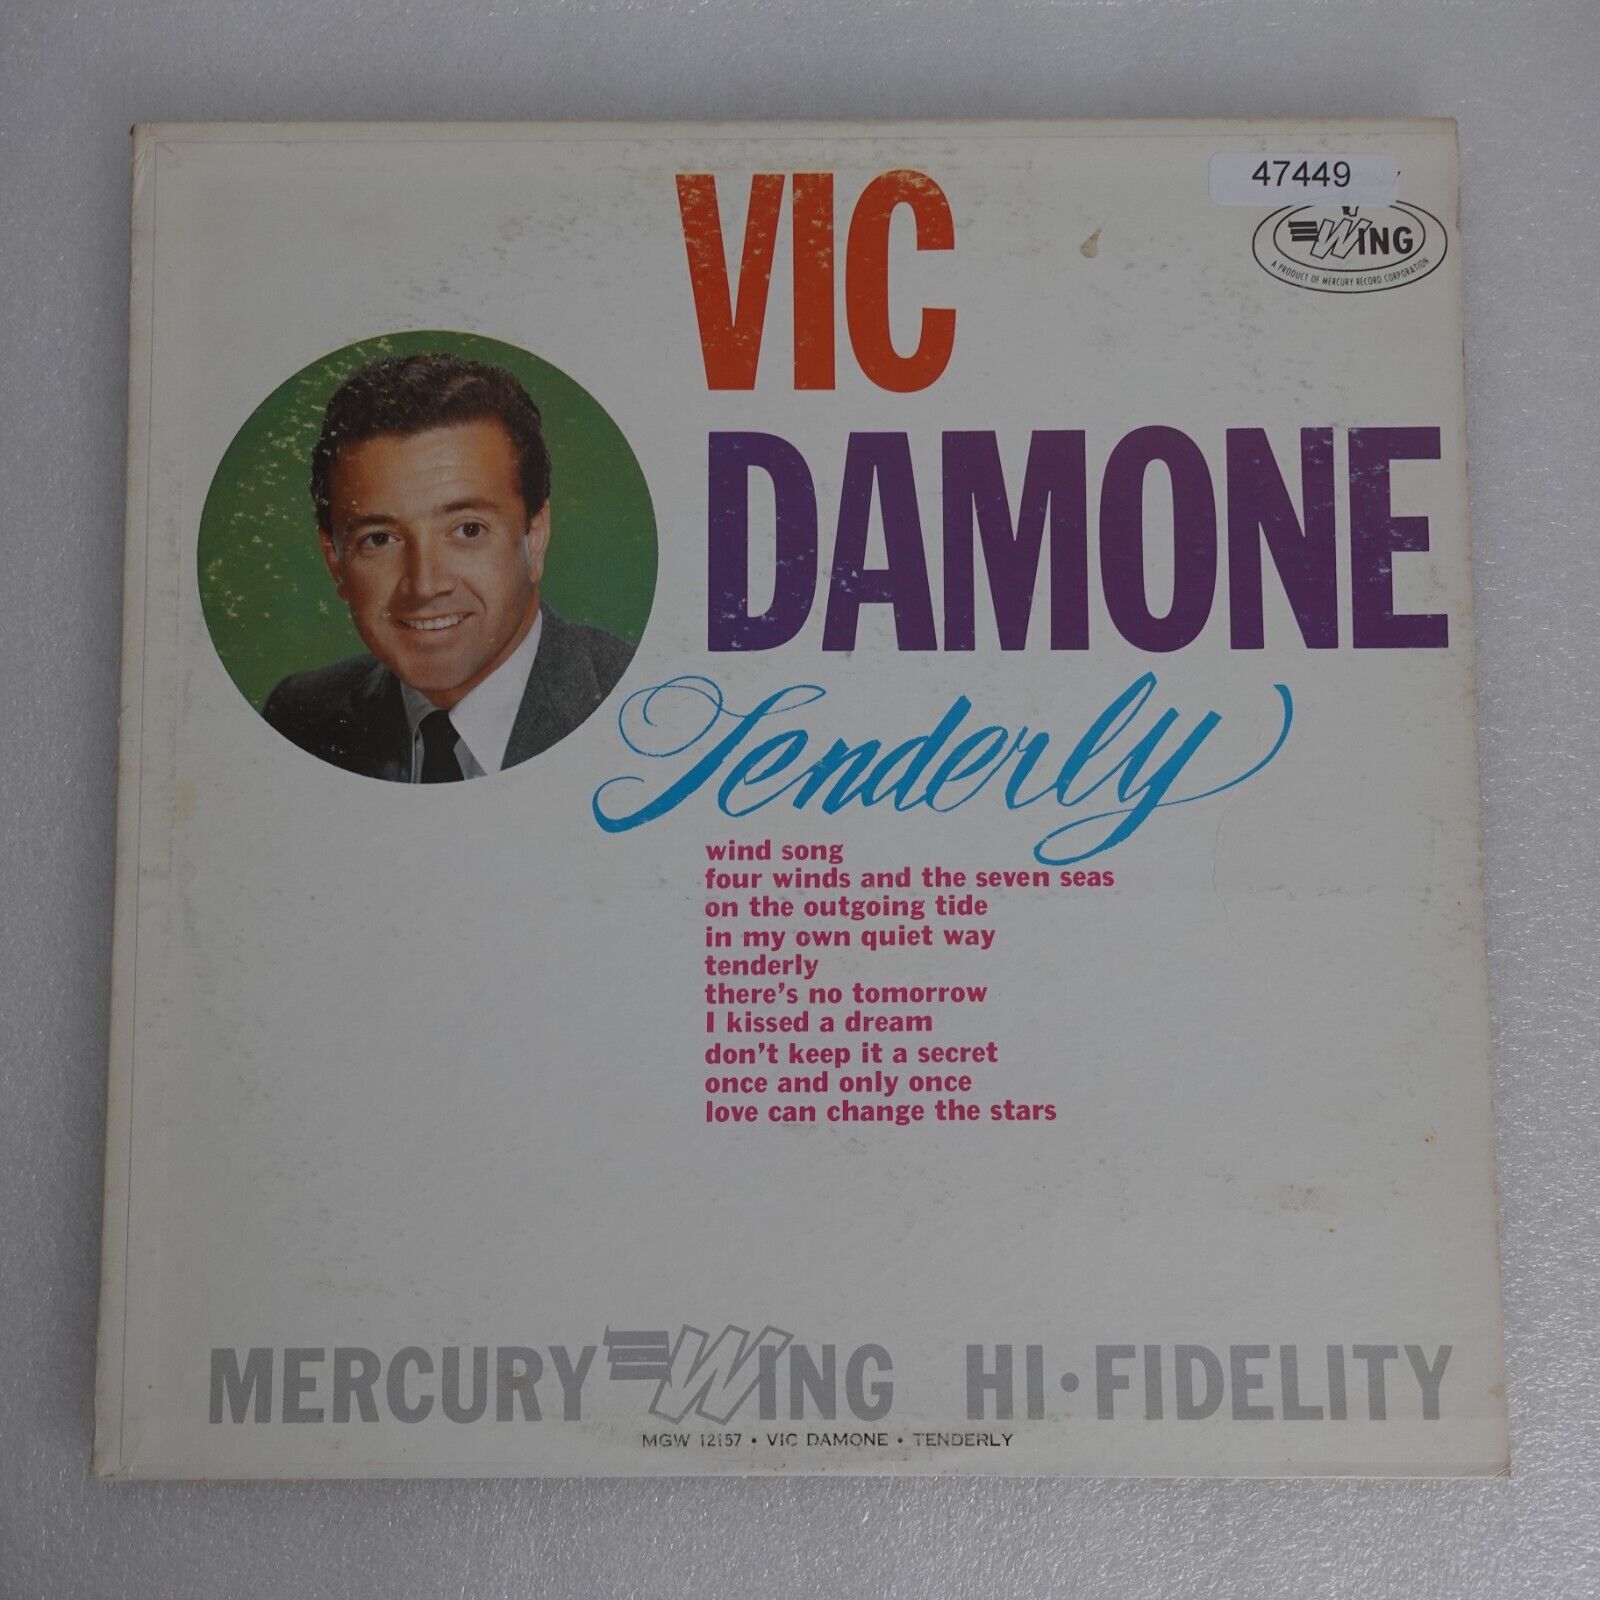 Vic Damone Tenderly LP Vinyl Record Album